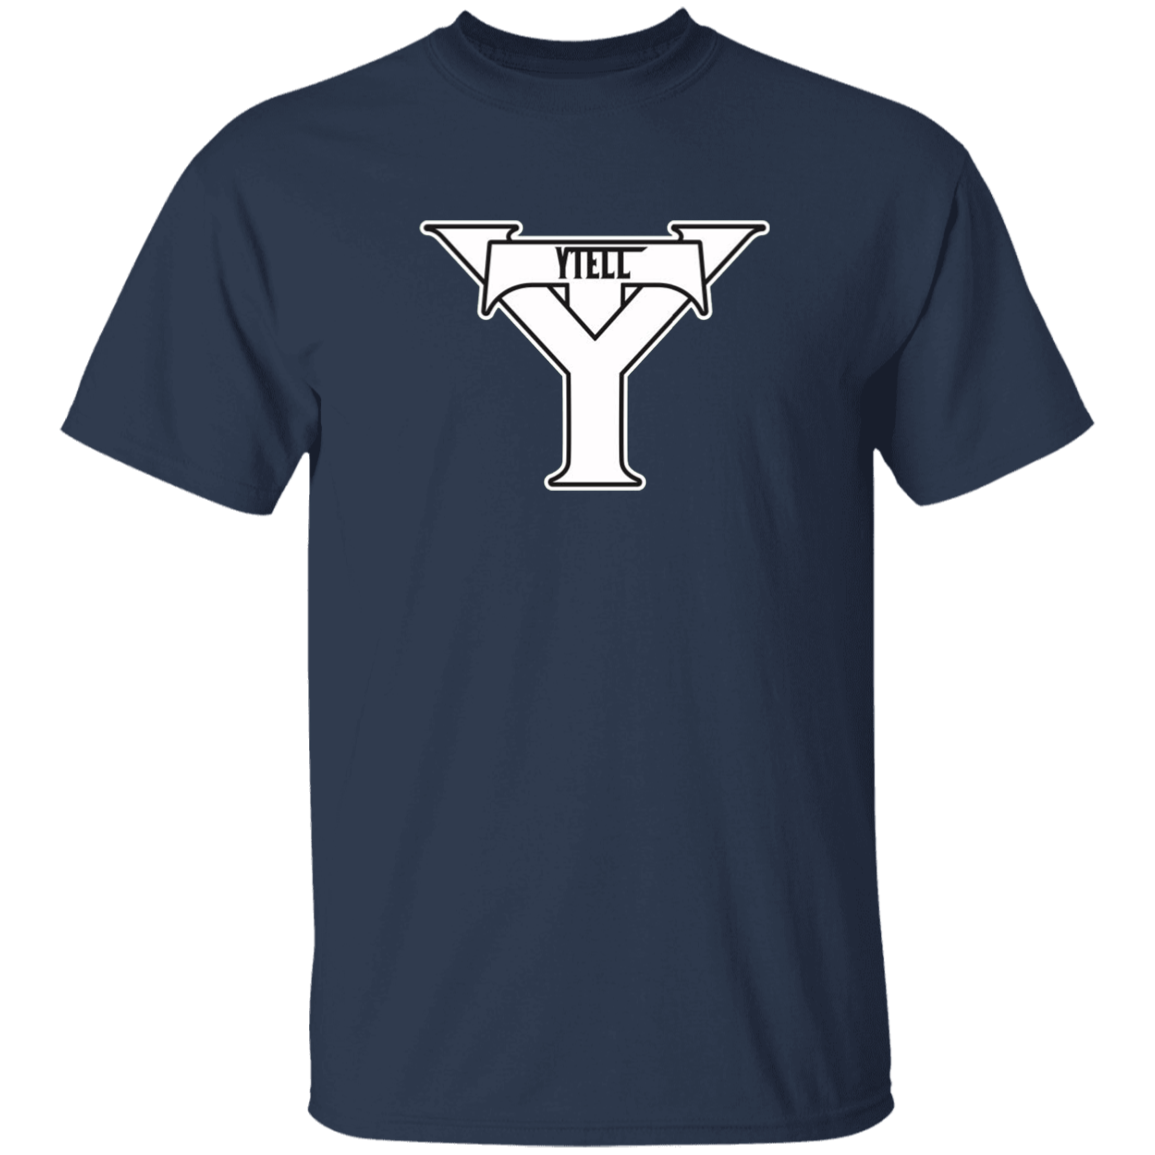 YTELL™ T-shirt